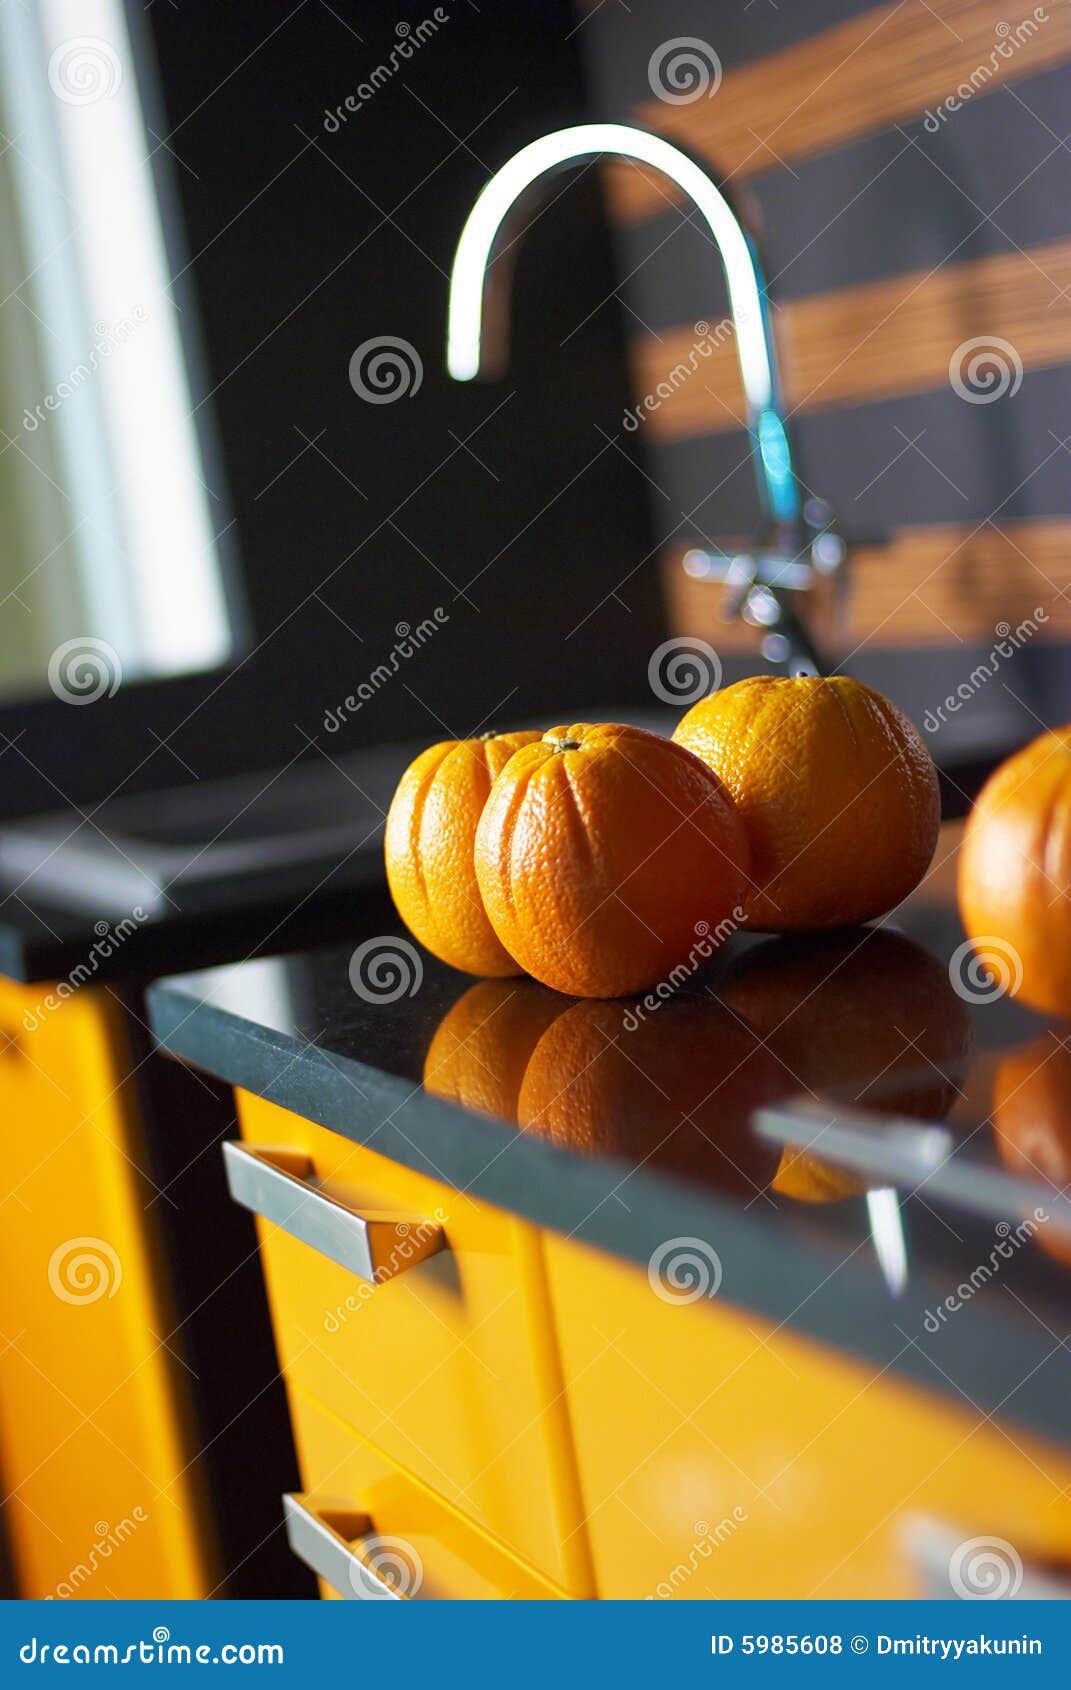 https://thumbs.dreamstime.com/z/orange-kitchen-table-5985608.jpg